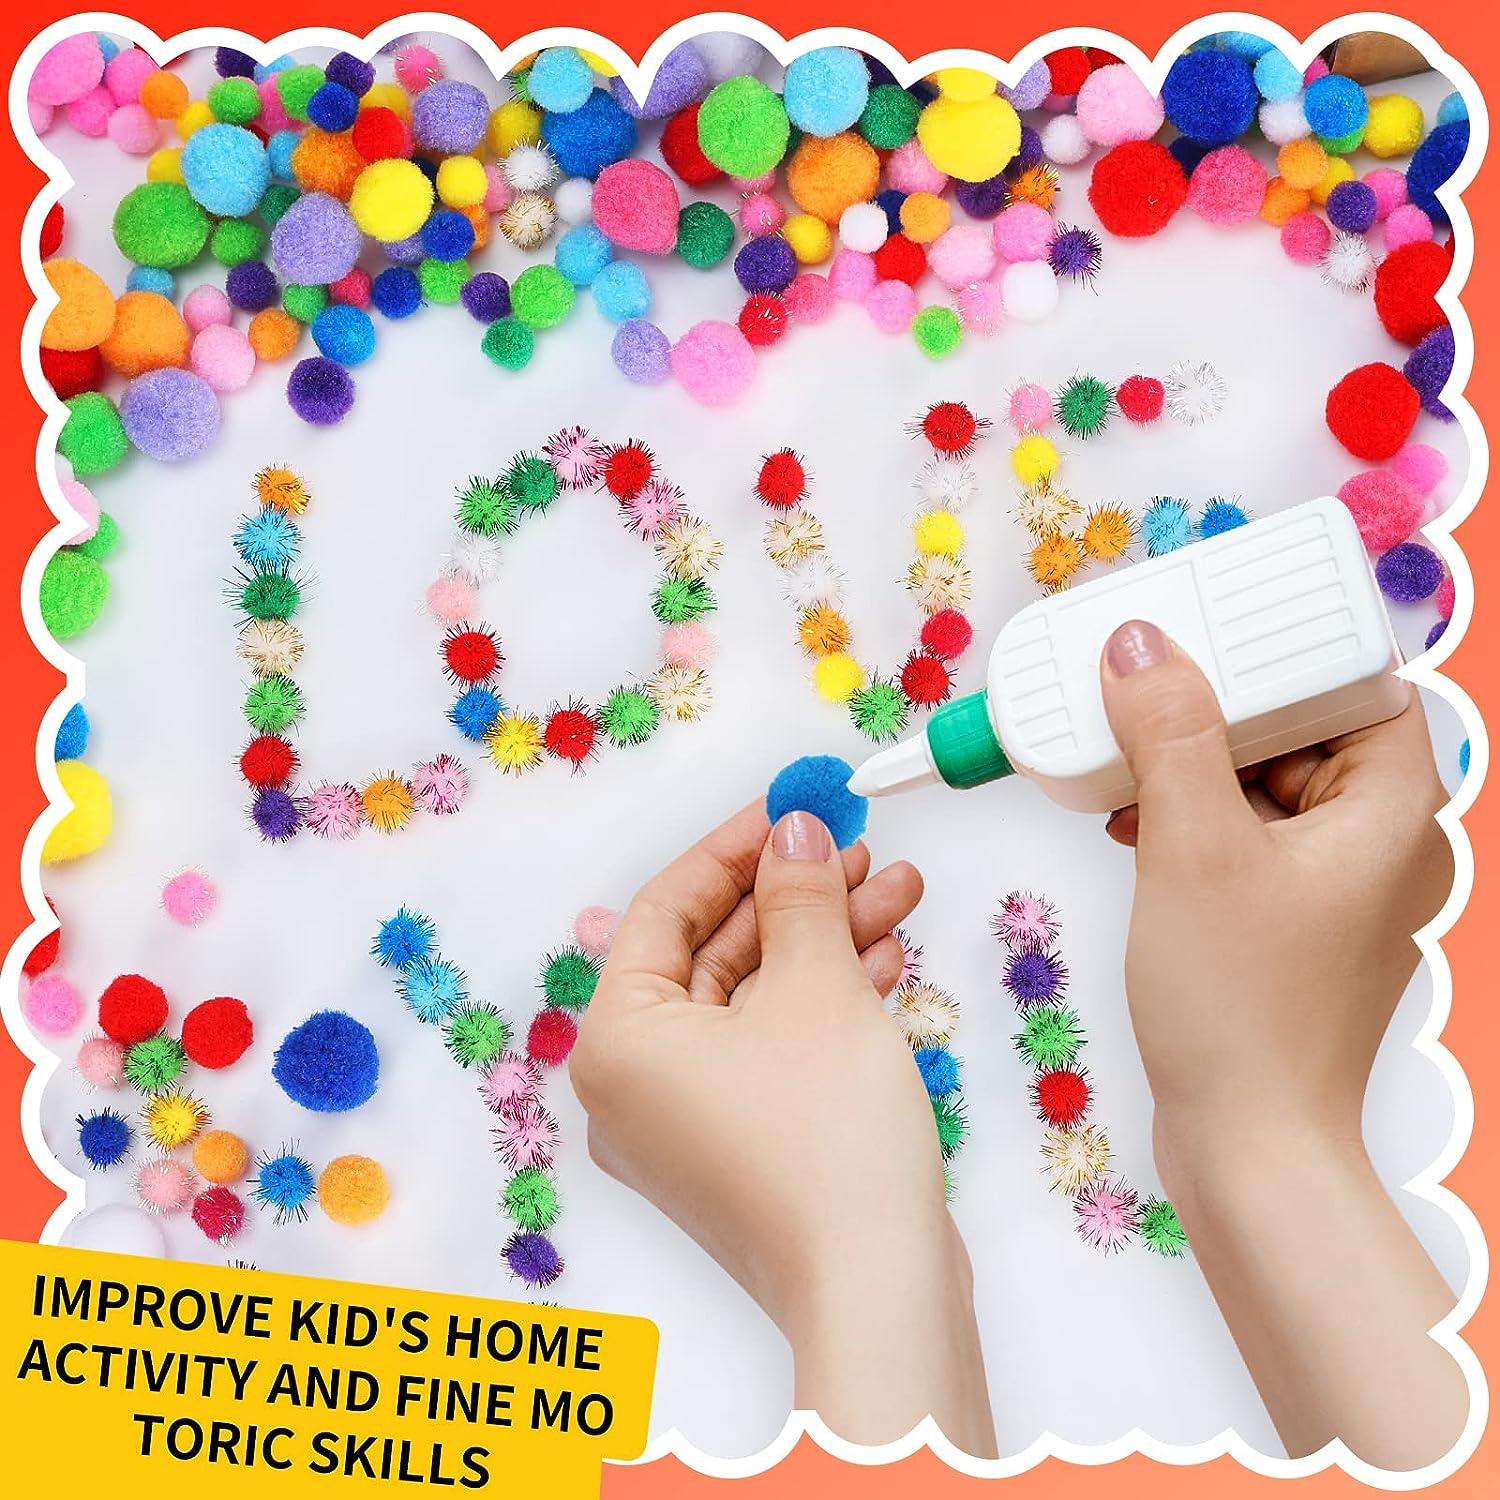 200 Pieces Pom Poms, Multicolor Pom Pom Balls Craft Pom Pom Balls with 24  Googly Eyes Vibrant Pom Poms for Arts and Crafts Making Decorations